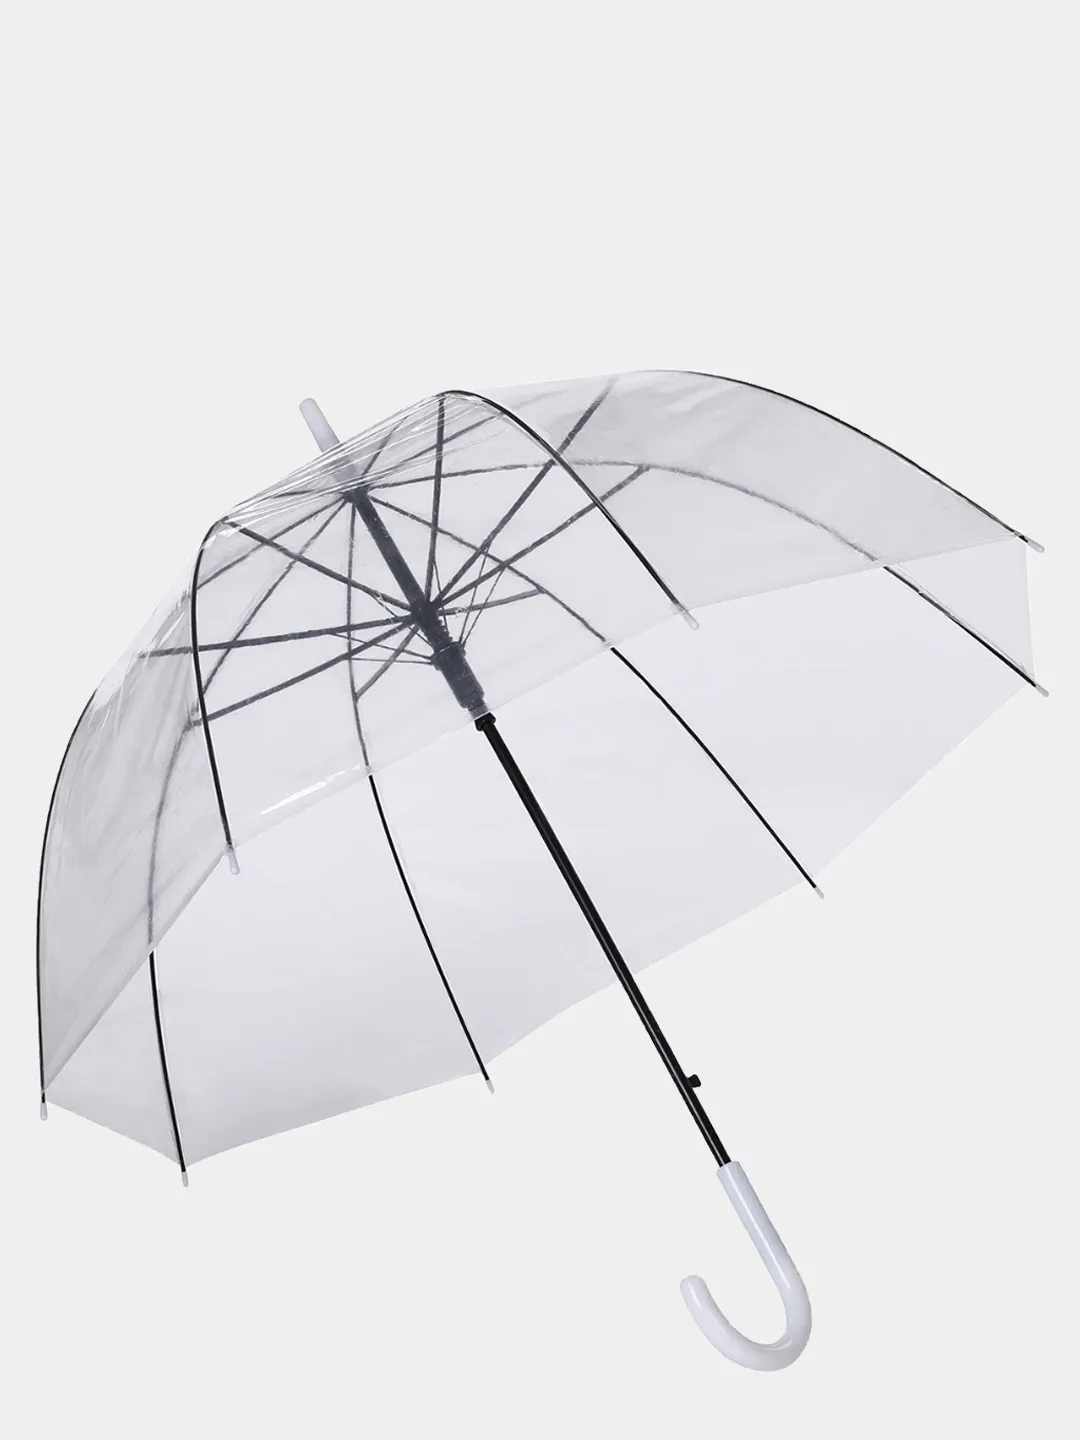 Зонт Амбрелла прозрачный. Прозрачный зонтик. Зонт-трость прозрачный. Зонт трость. Прозрачные зонтики купить